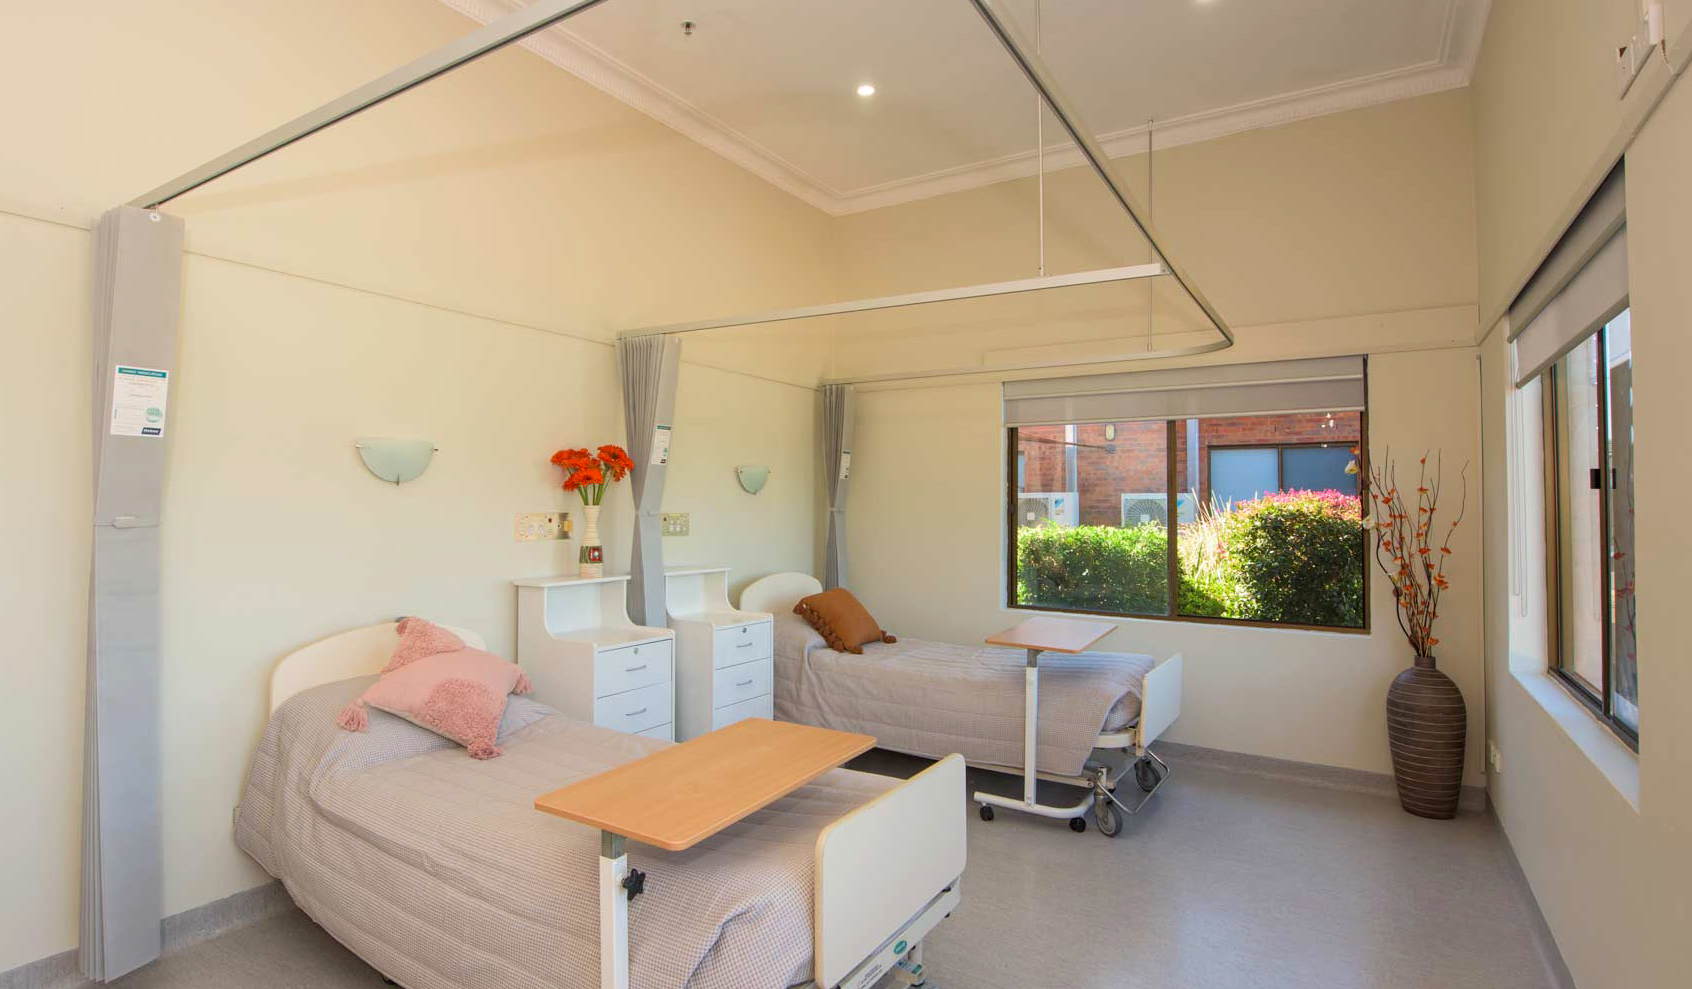 Lansdowne Aged Care Facility, Cabramatta | Arete Health Care